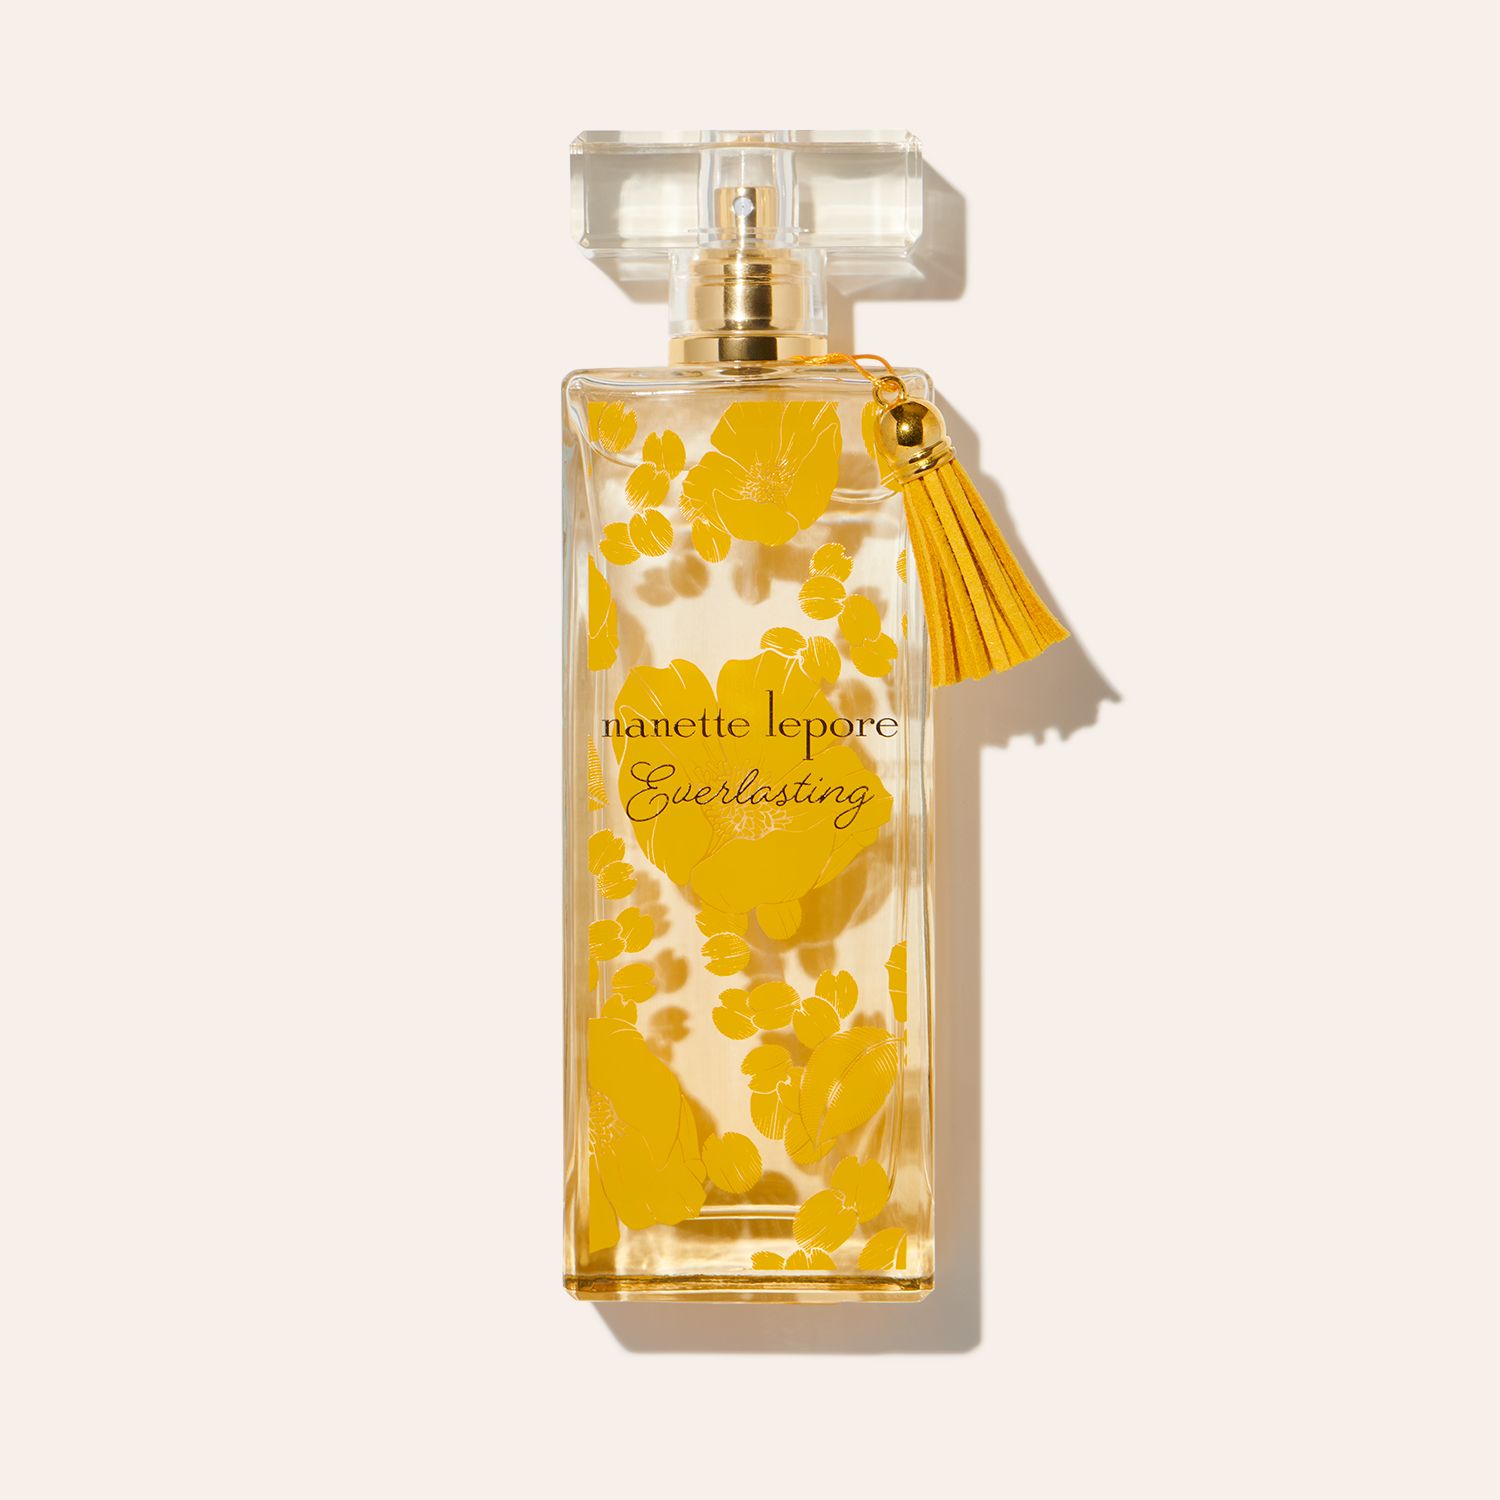 Scentbird Monthly Perfume Subscription Box: Designer Scents $16.95